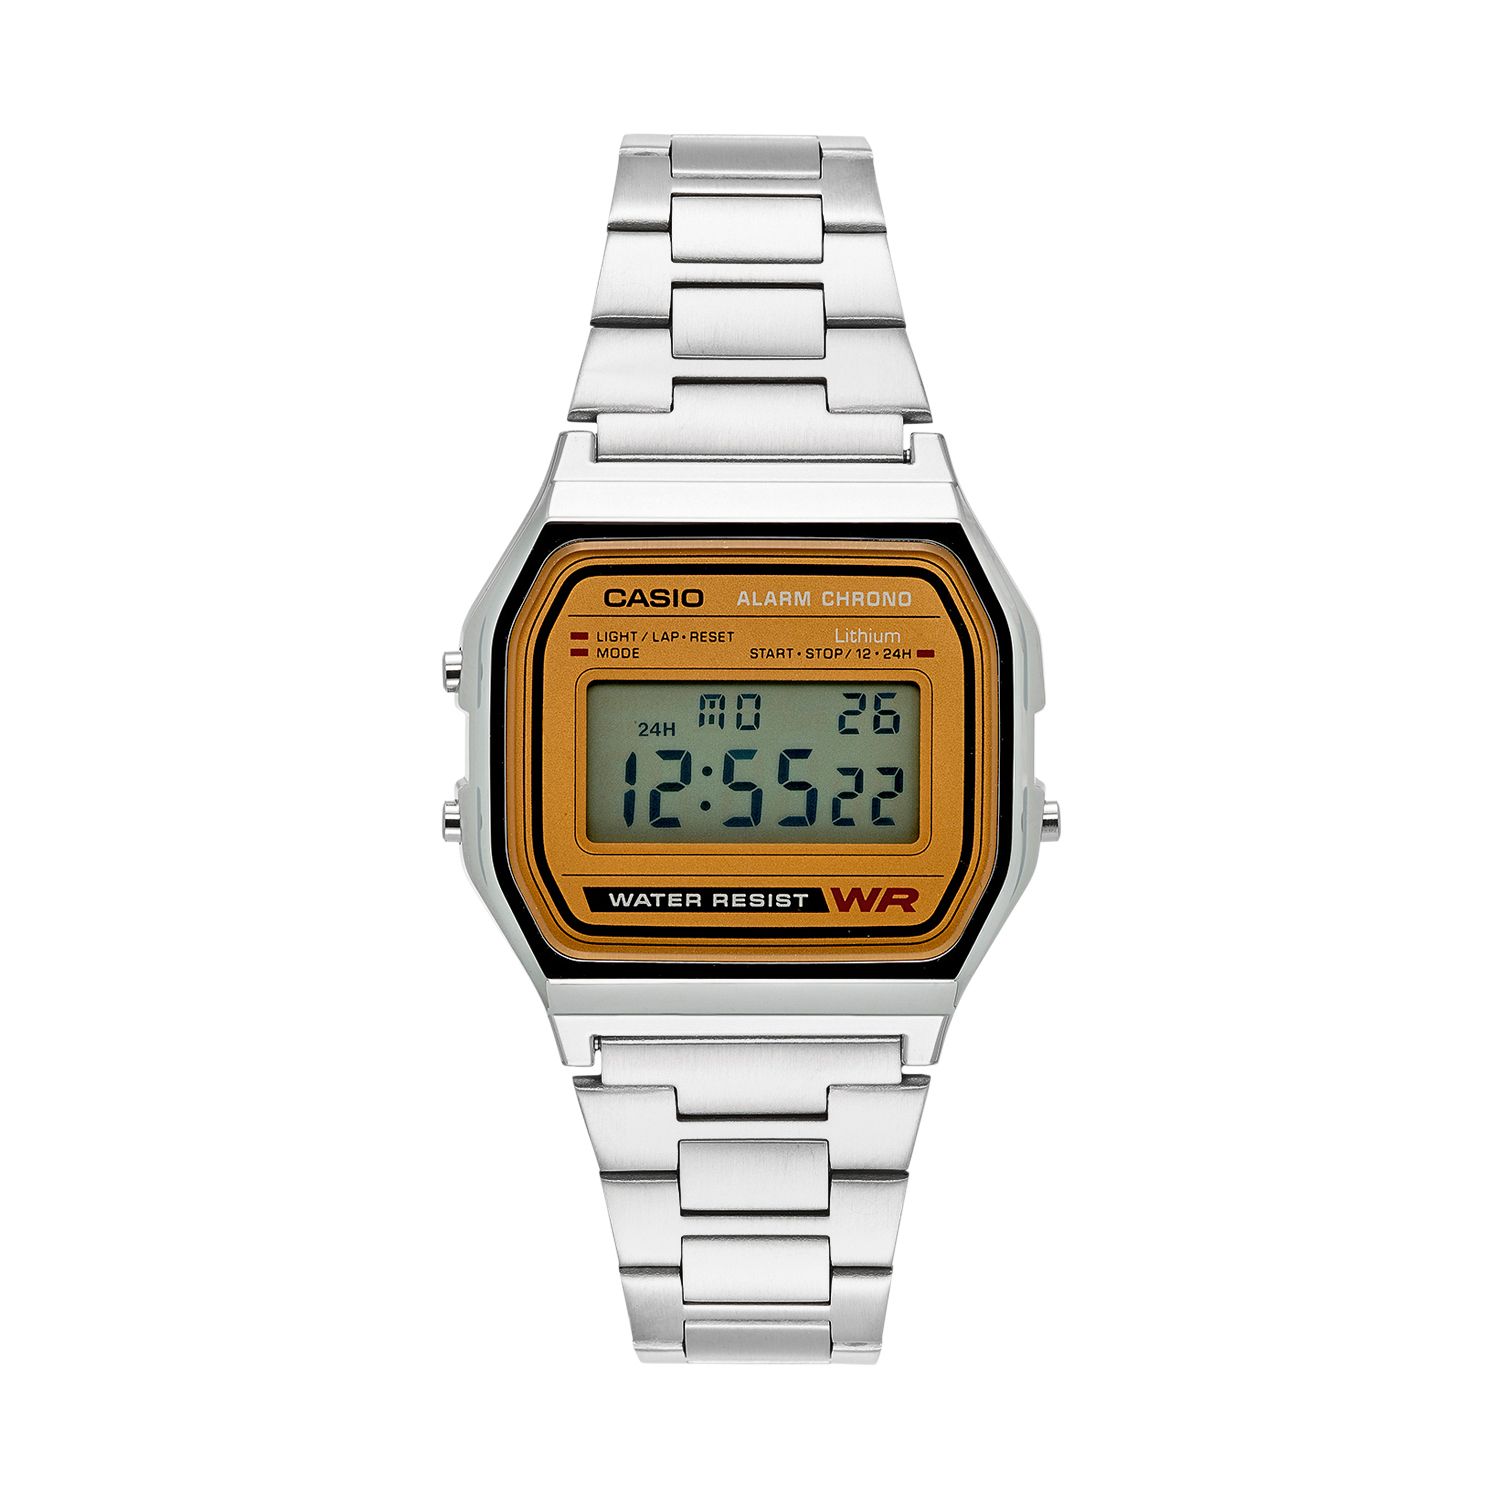 Casio Men's World Time Watch - Blue (ae1000w-2avcf) : Target